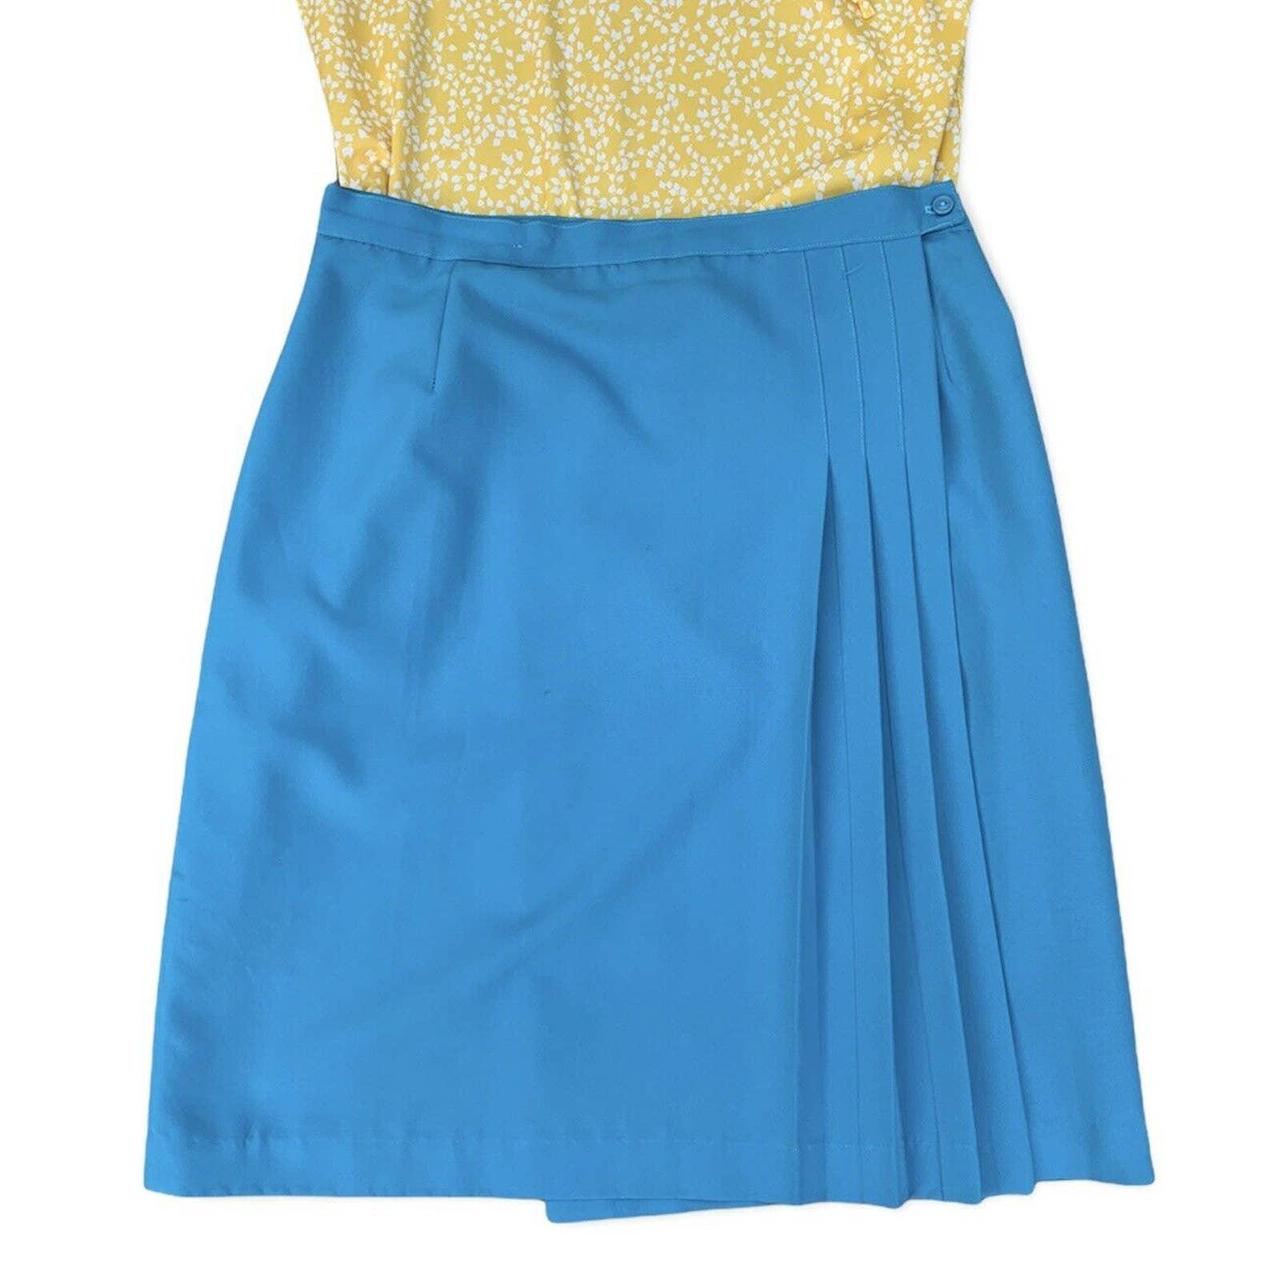 Product Image 2 - Blue Pleated Skirt

Knee Length- below